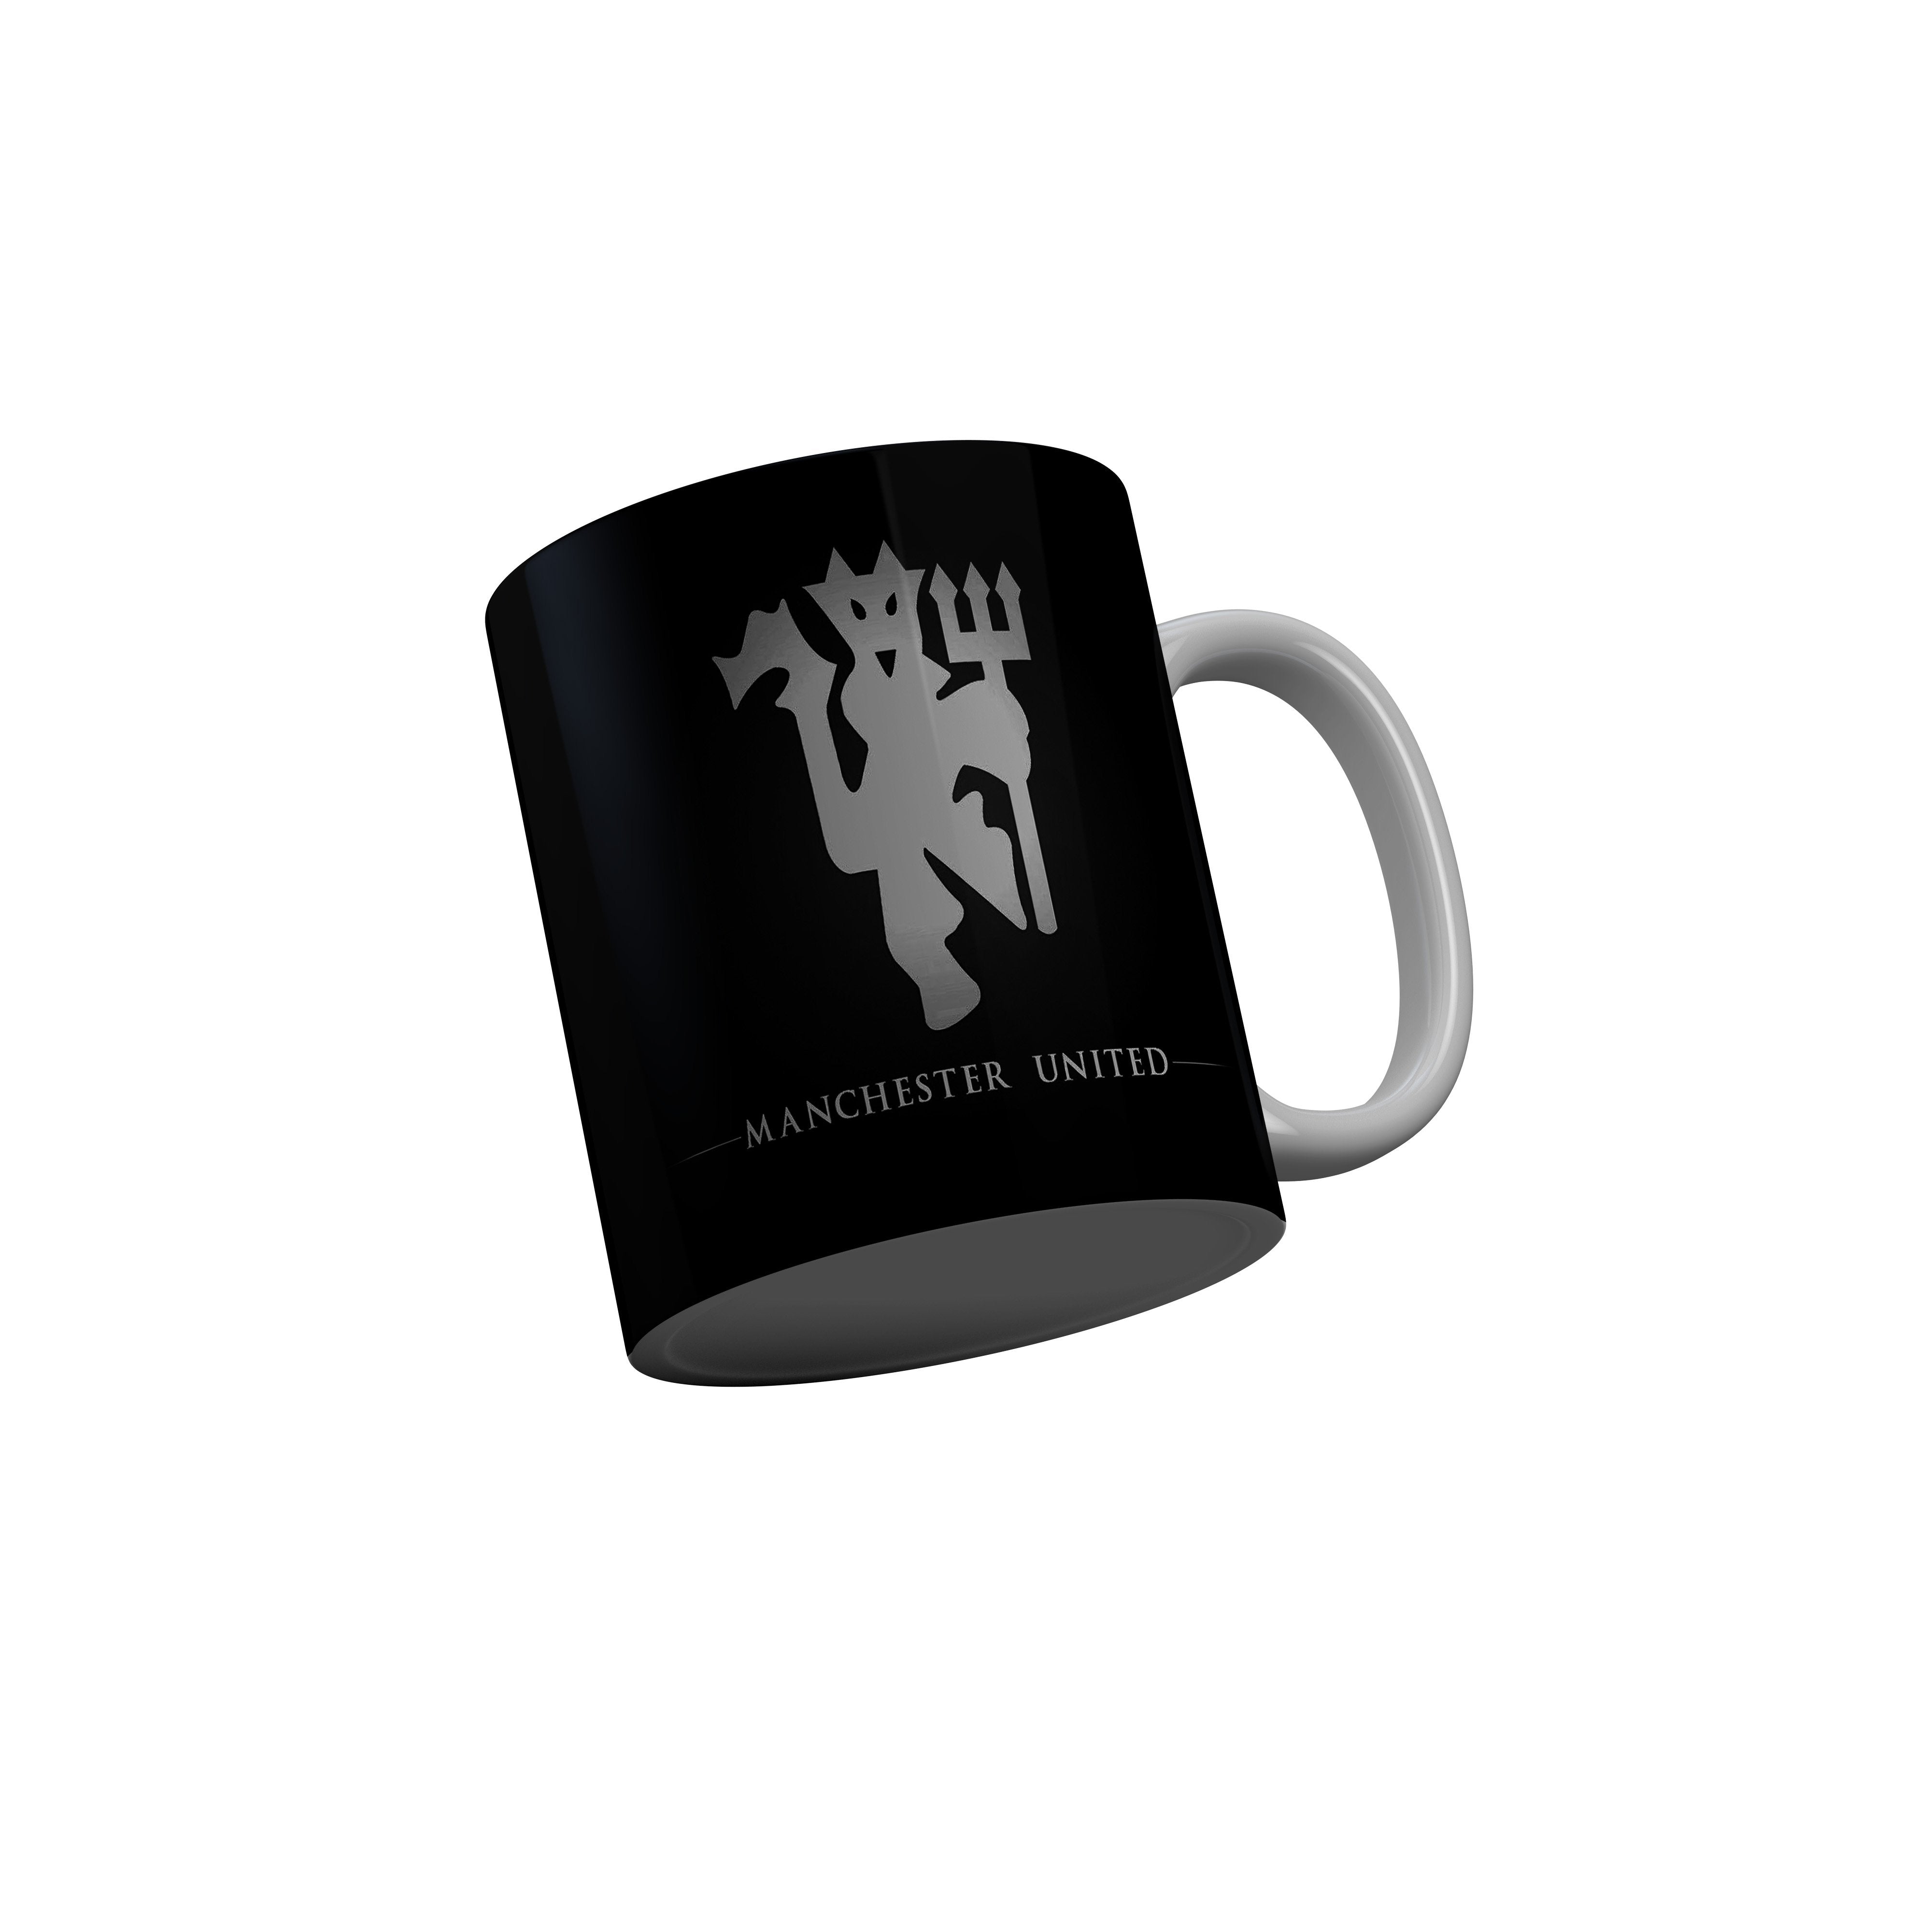 FashionRazor Manchester United Black Ceramic Coffee Mug